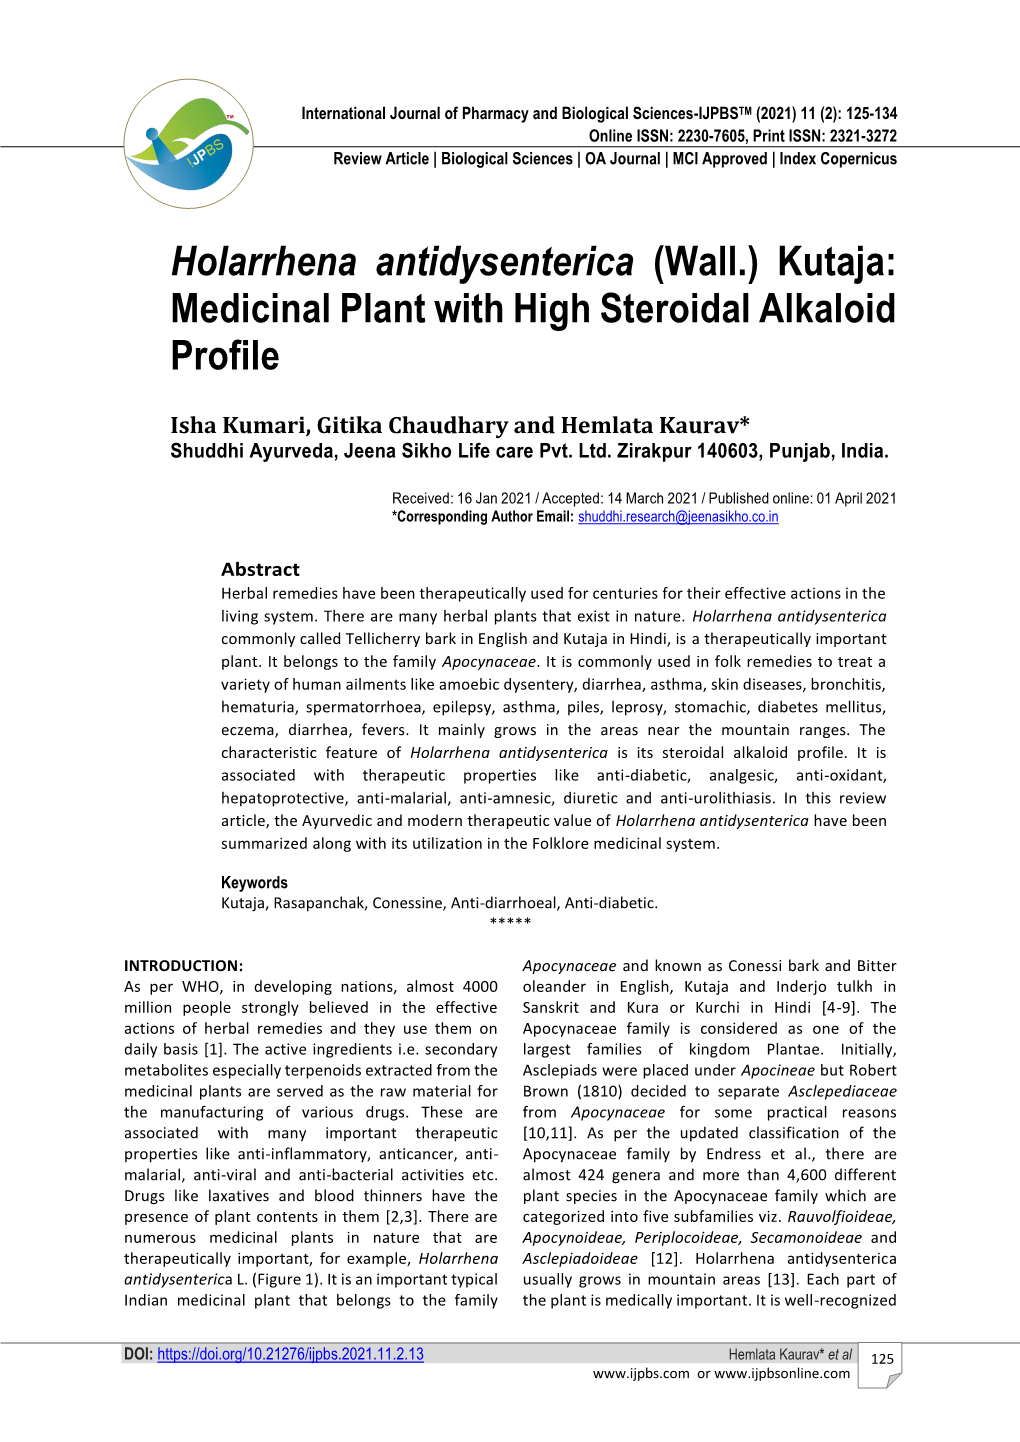 Holarrhena Antidysenterica (Wall.) Kutaja: Medicinal Plant with High Steroidal Alkaloid Profile